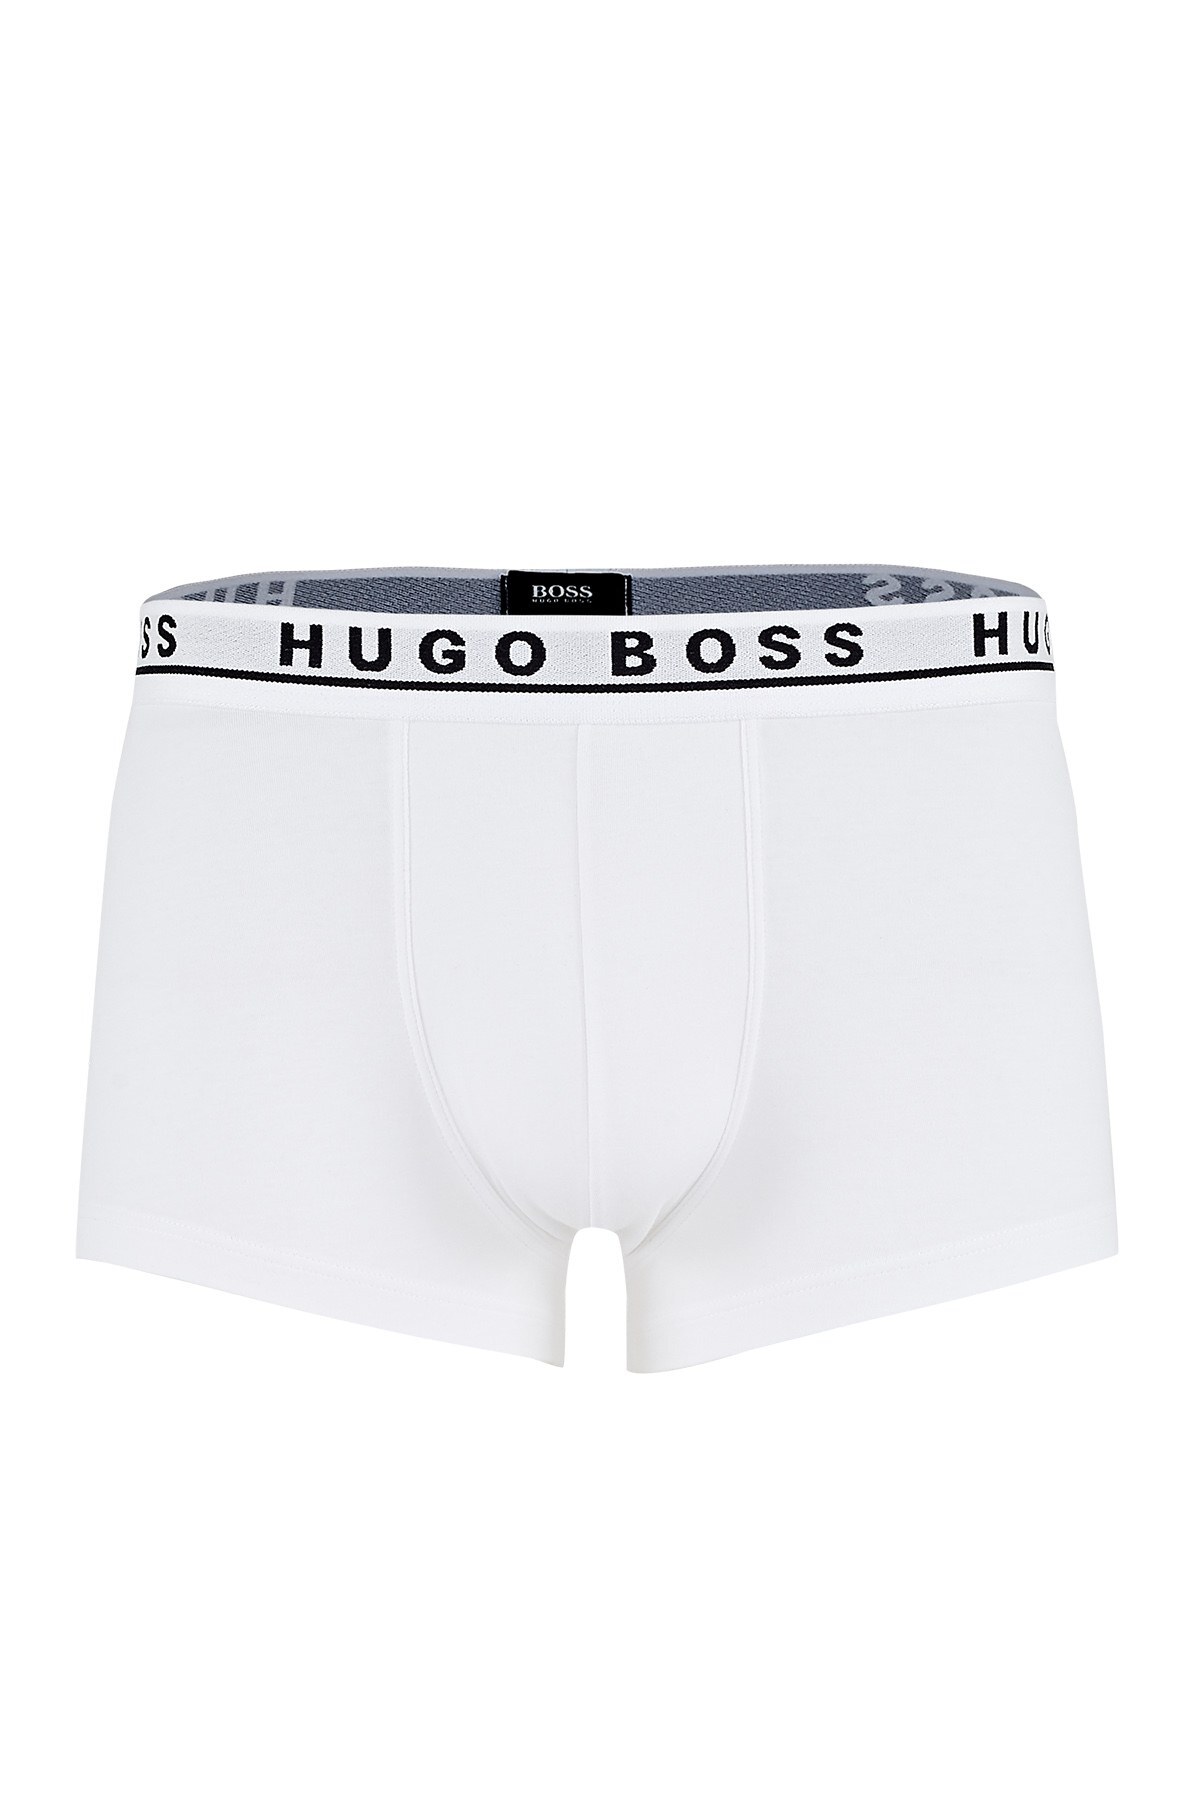 Hugo Boss Pamuklu 3 Pack Erkek Boxer 50325403 999 SİYAH-BEYAZ-GRİ